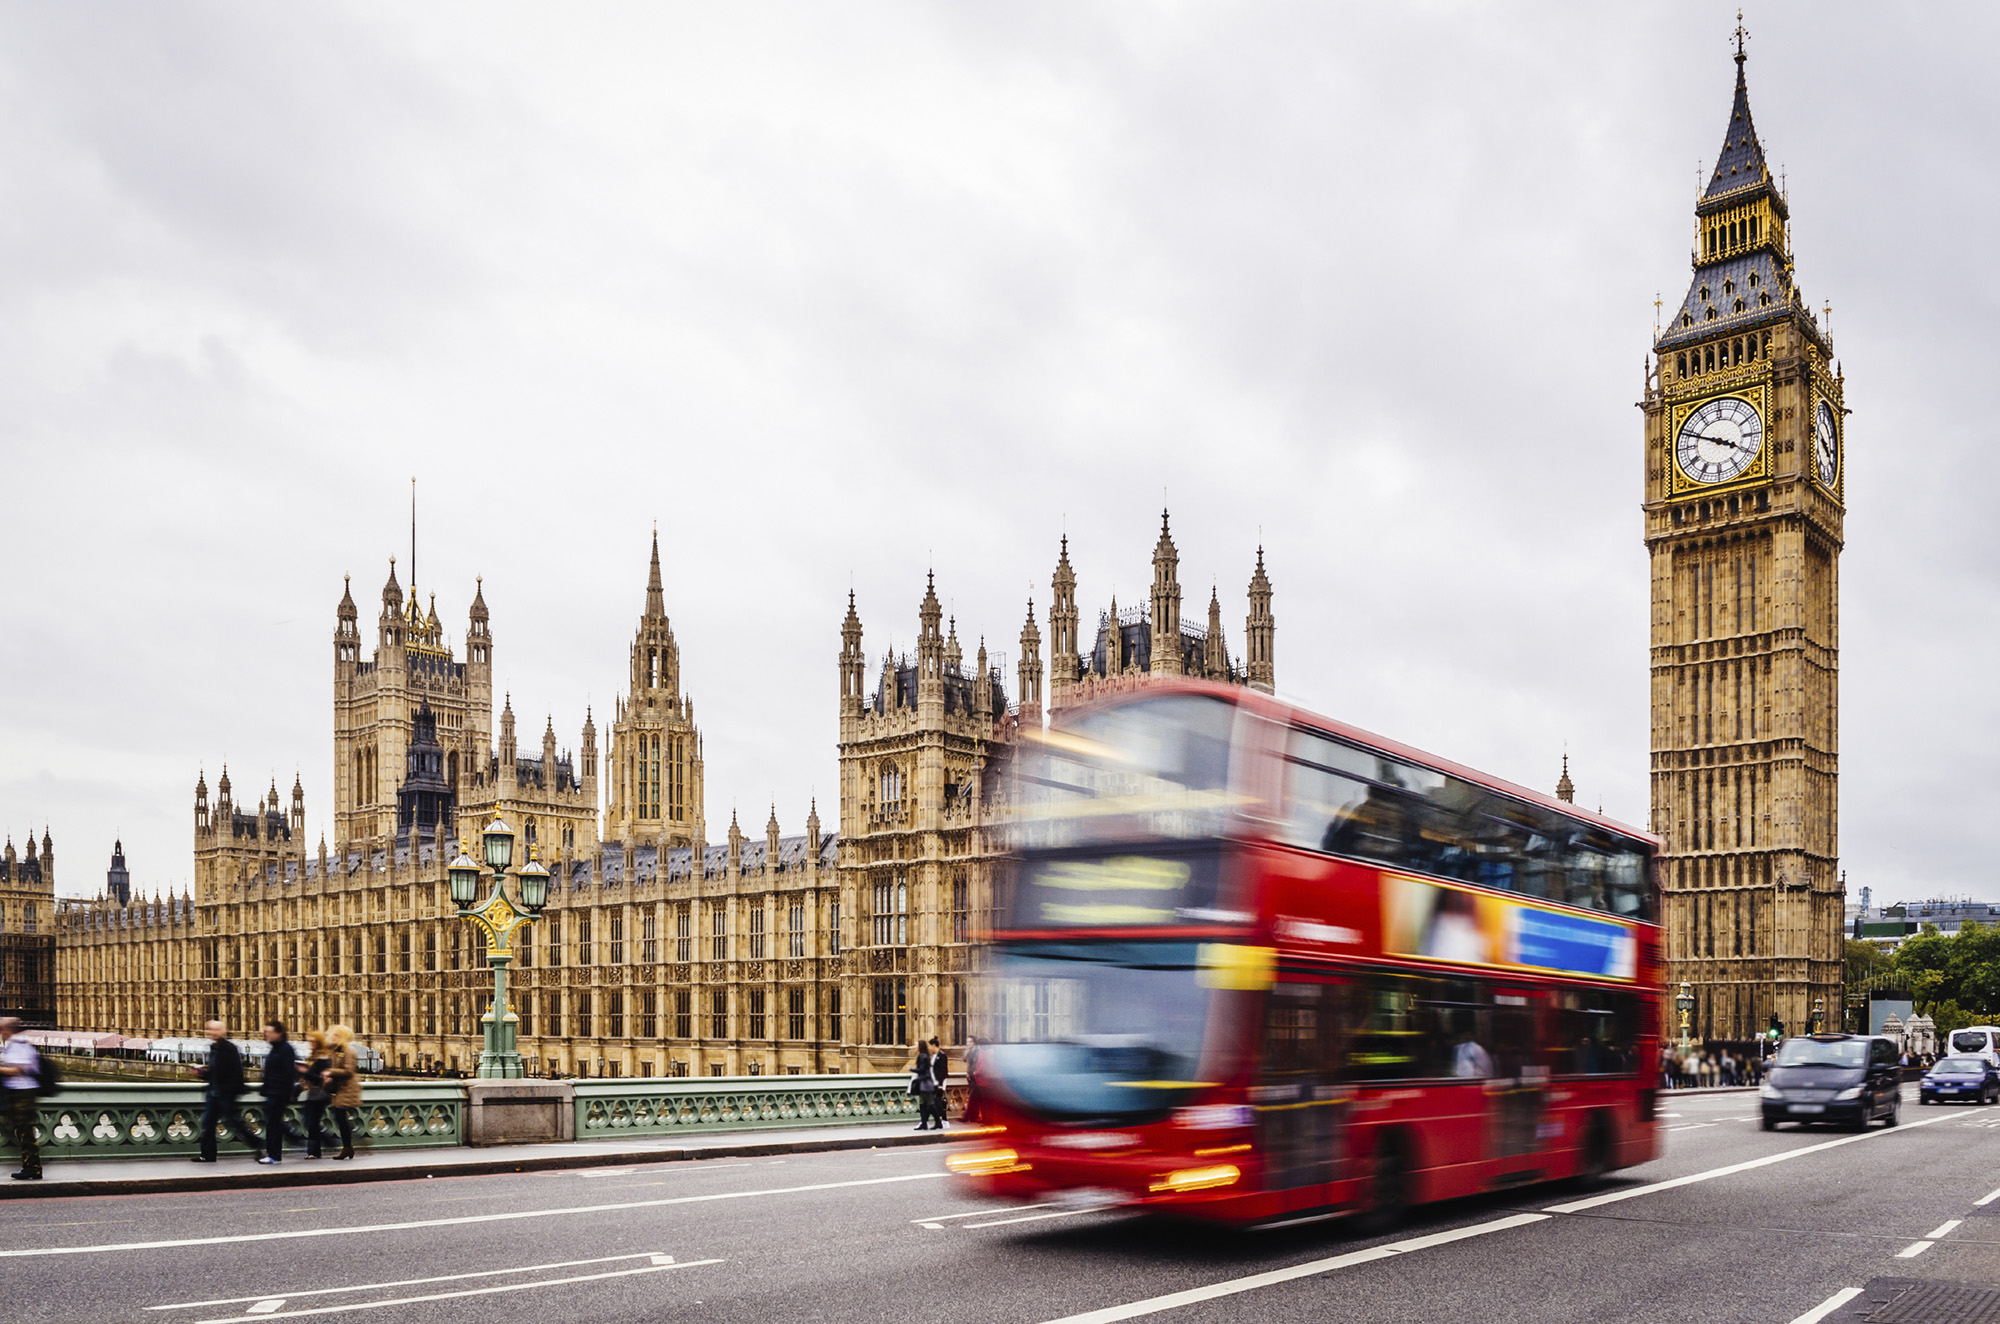 London bus_Big Ben_Proxama